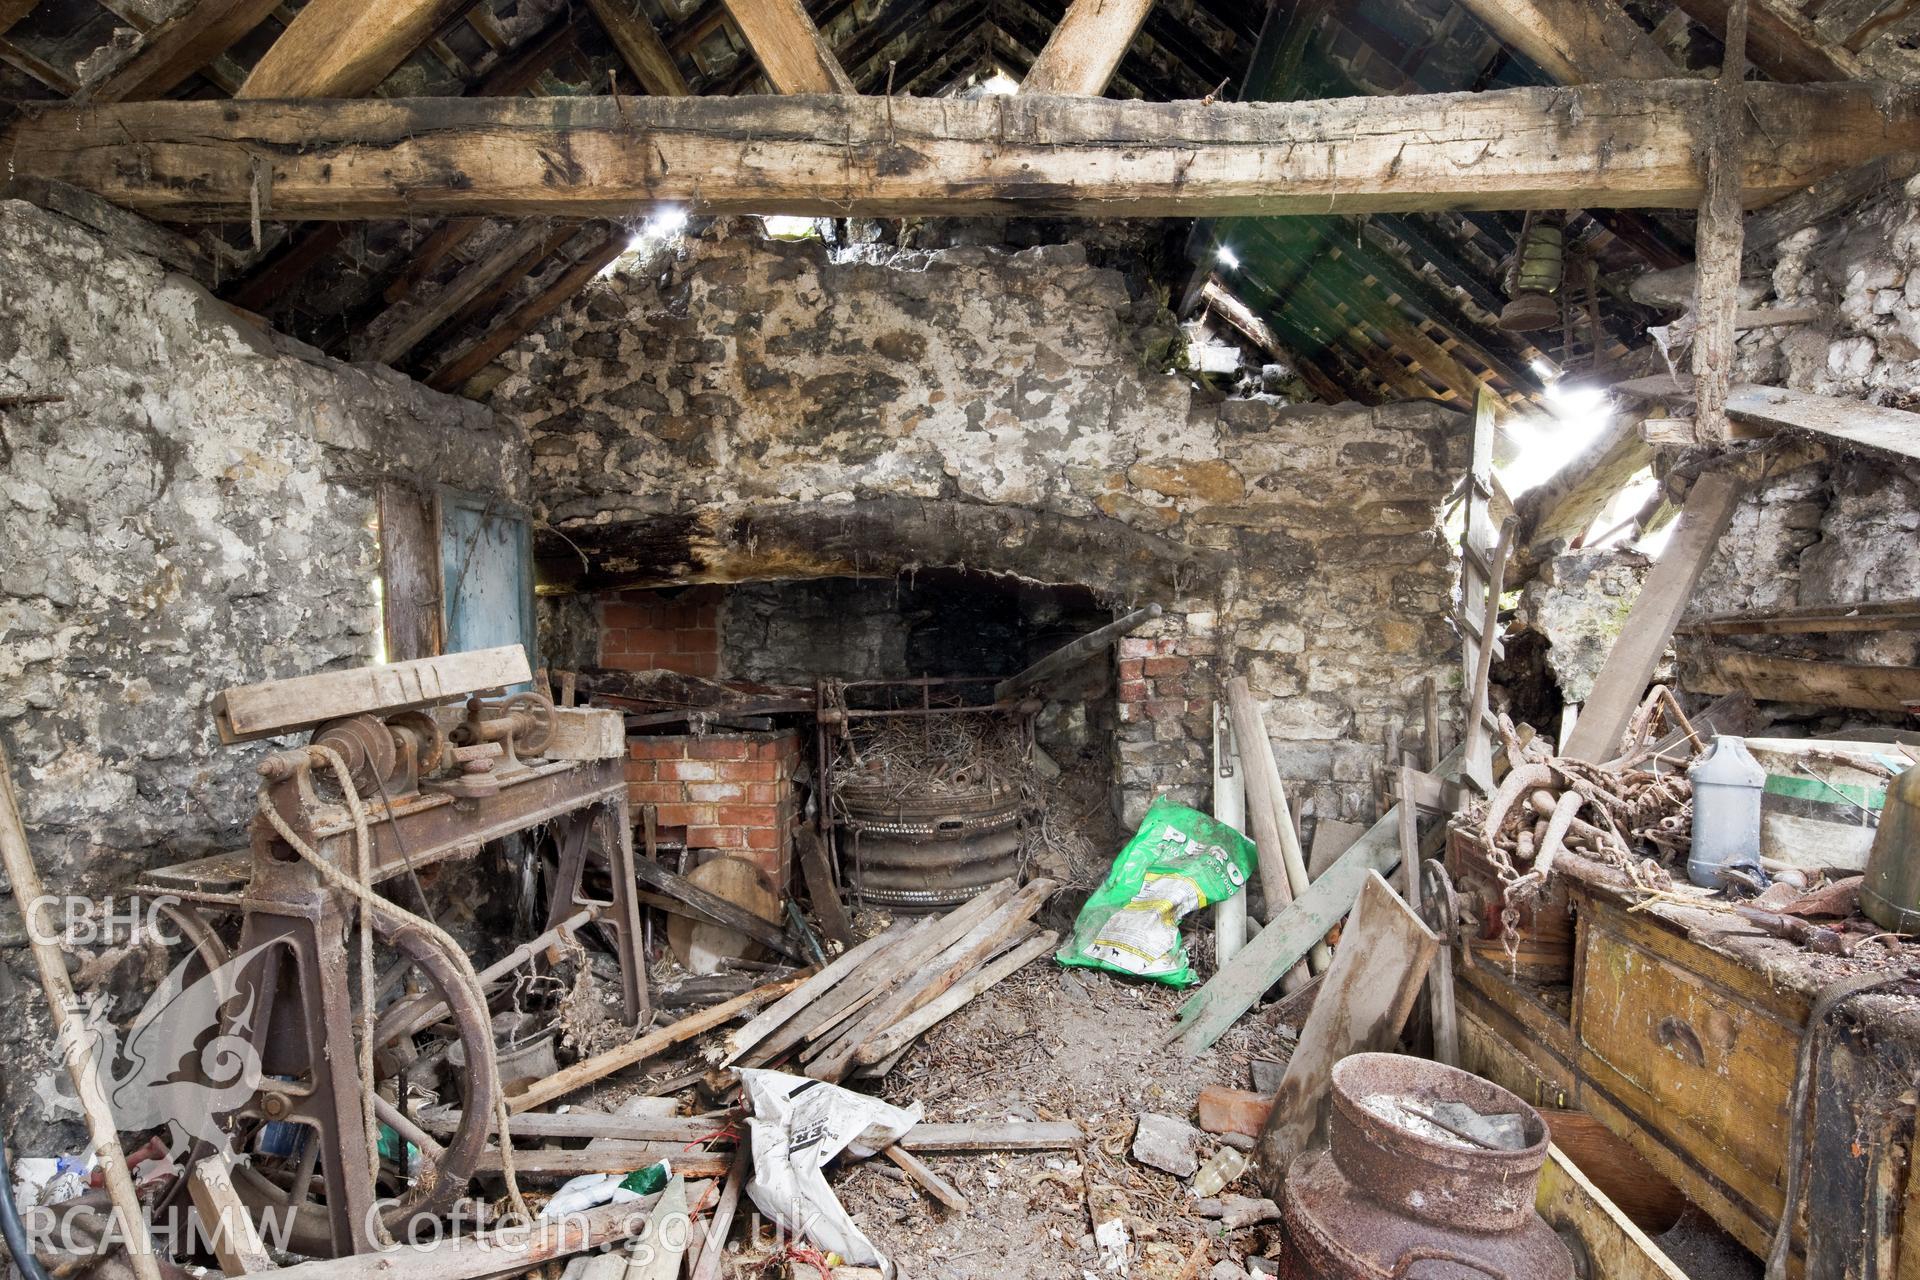 Interior of workshop, treadle lathe, blacksmiths bellows, workbench.